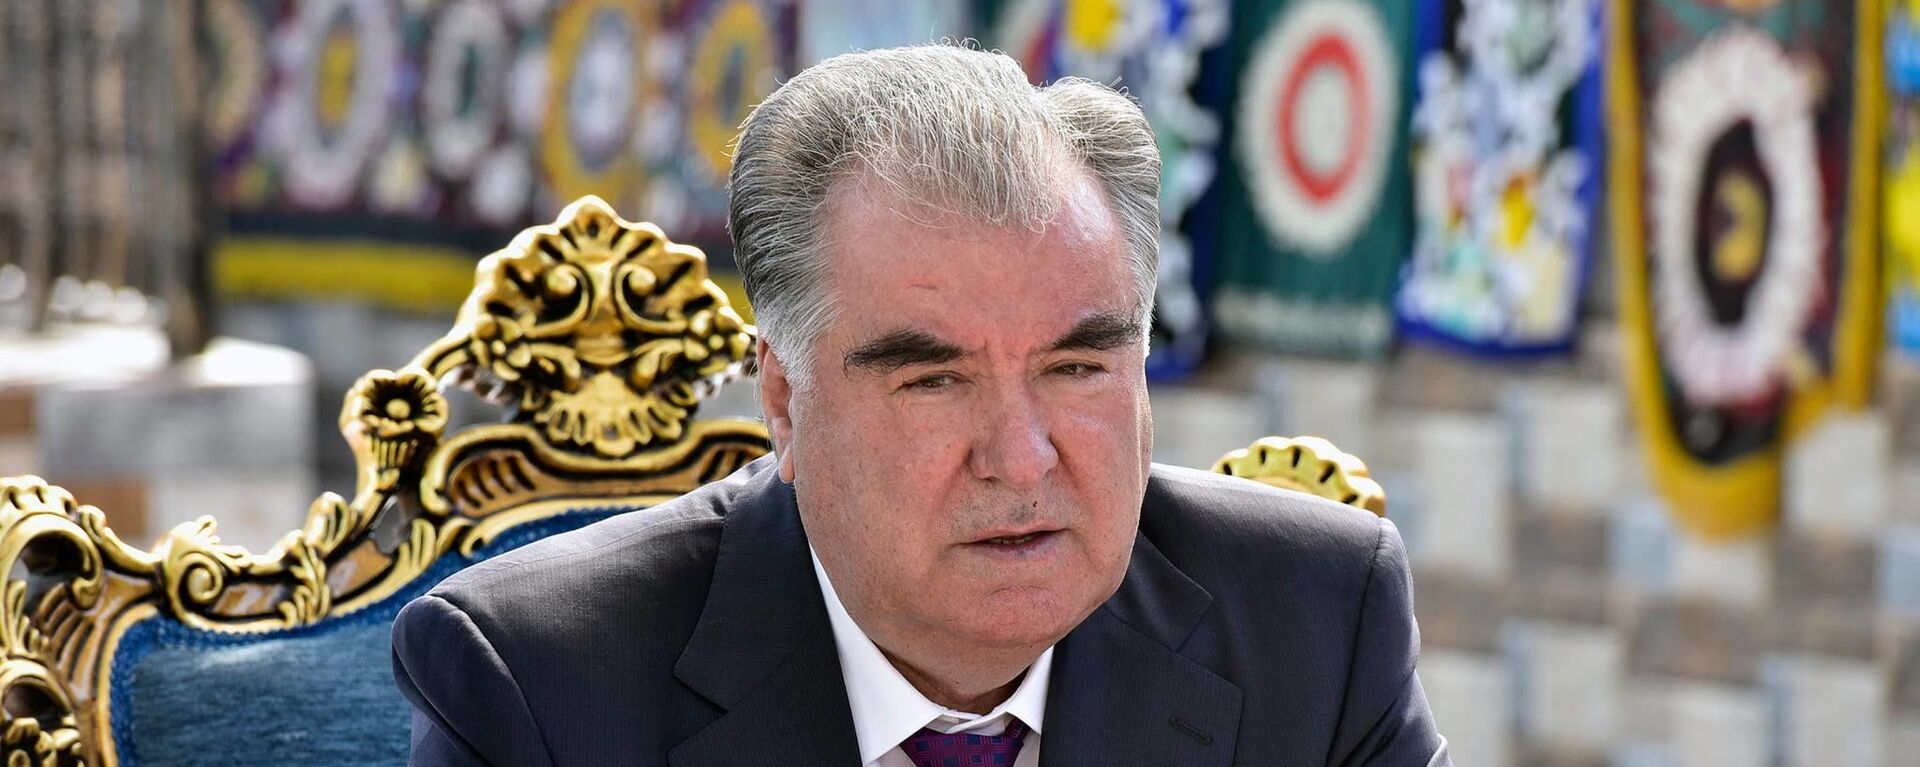 Президент Республики Таджикистан Эмомали Рахмон - Sputnik Тоҷикистон, 1920, 26.03.2021